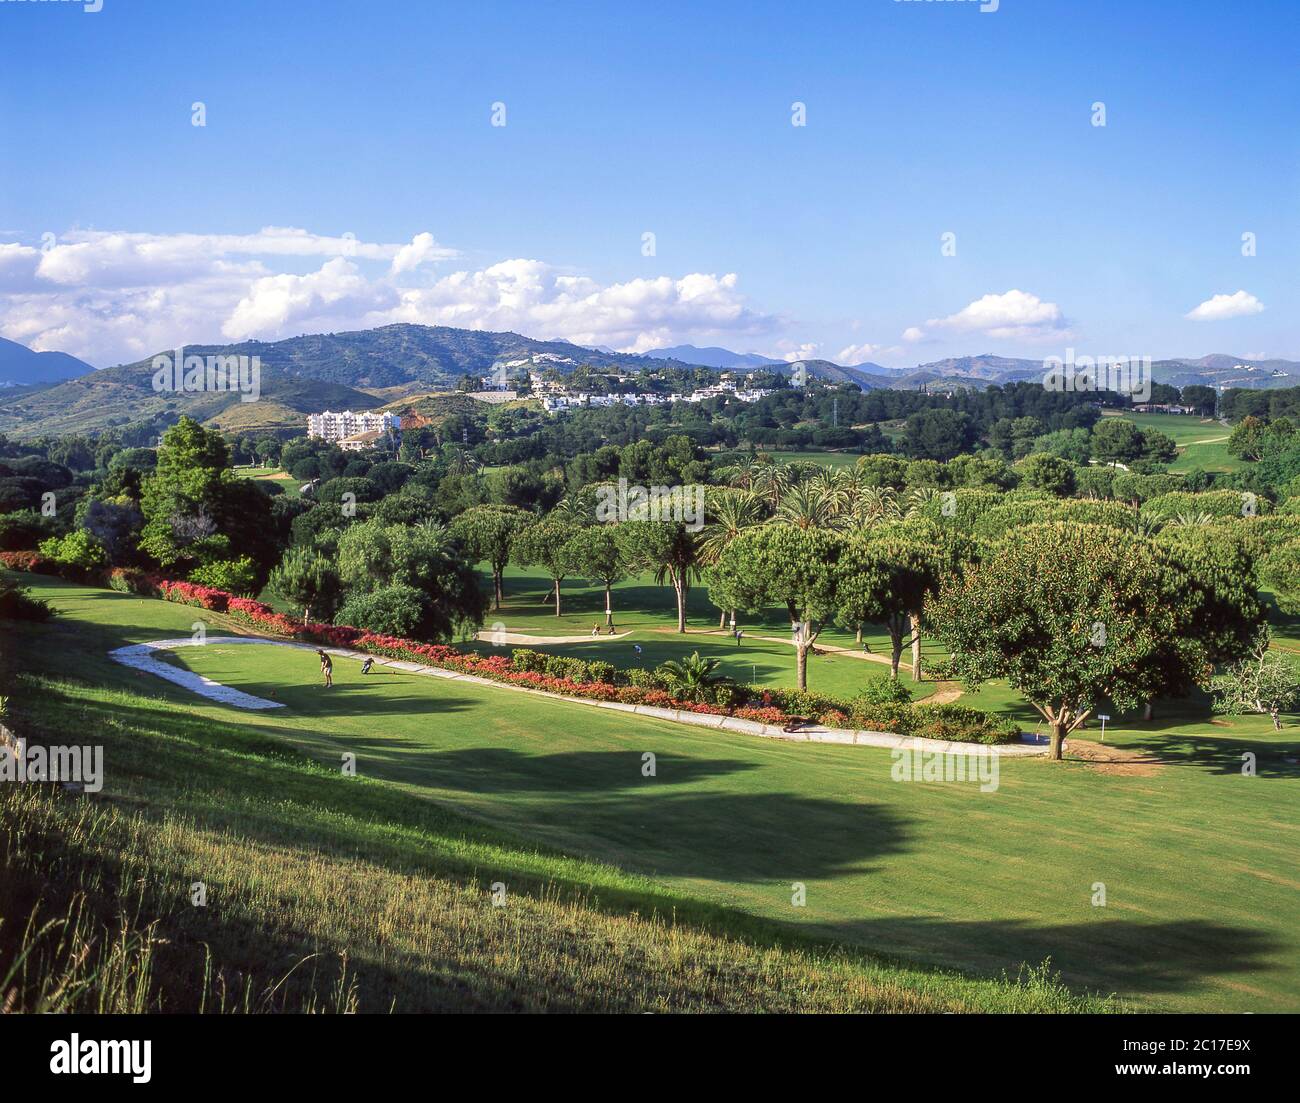 Rio Real Golfplatz, Marbella, Costa del Sol, Provinz Malaga, Andalusien, Spanien Stockfoto